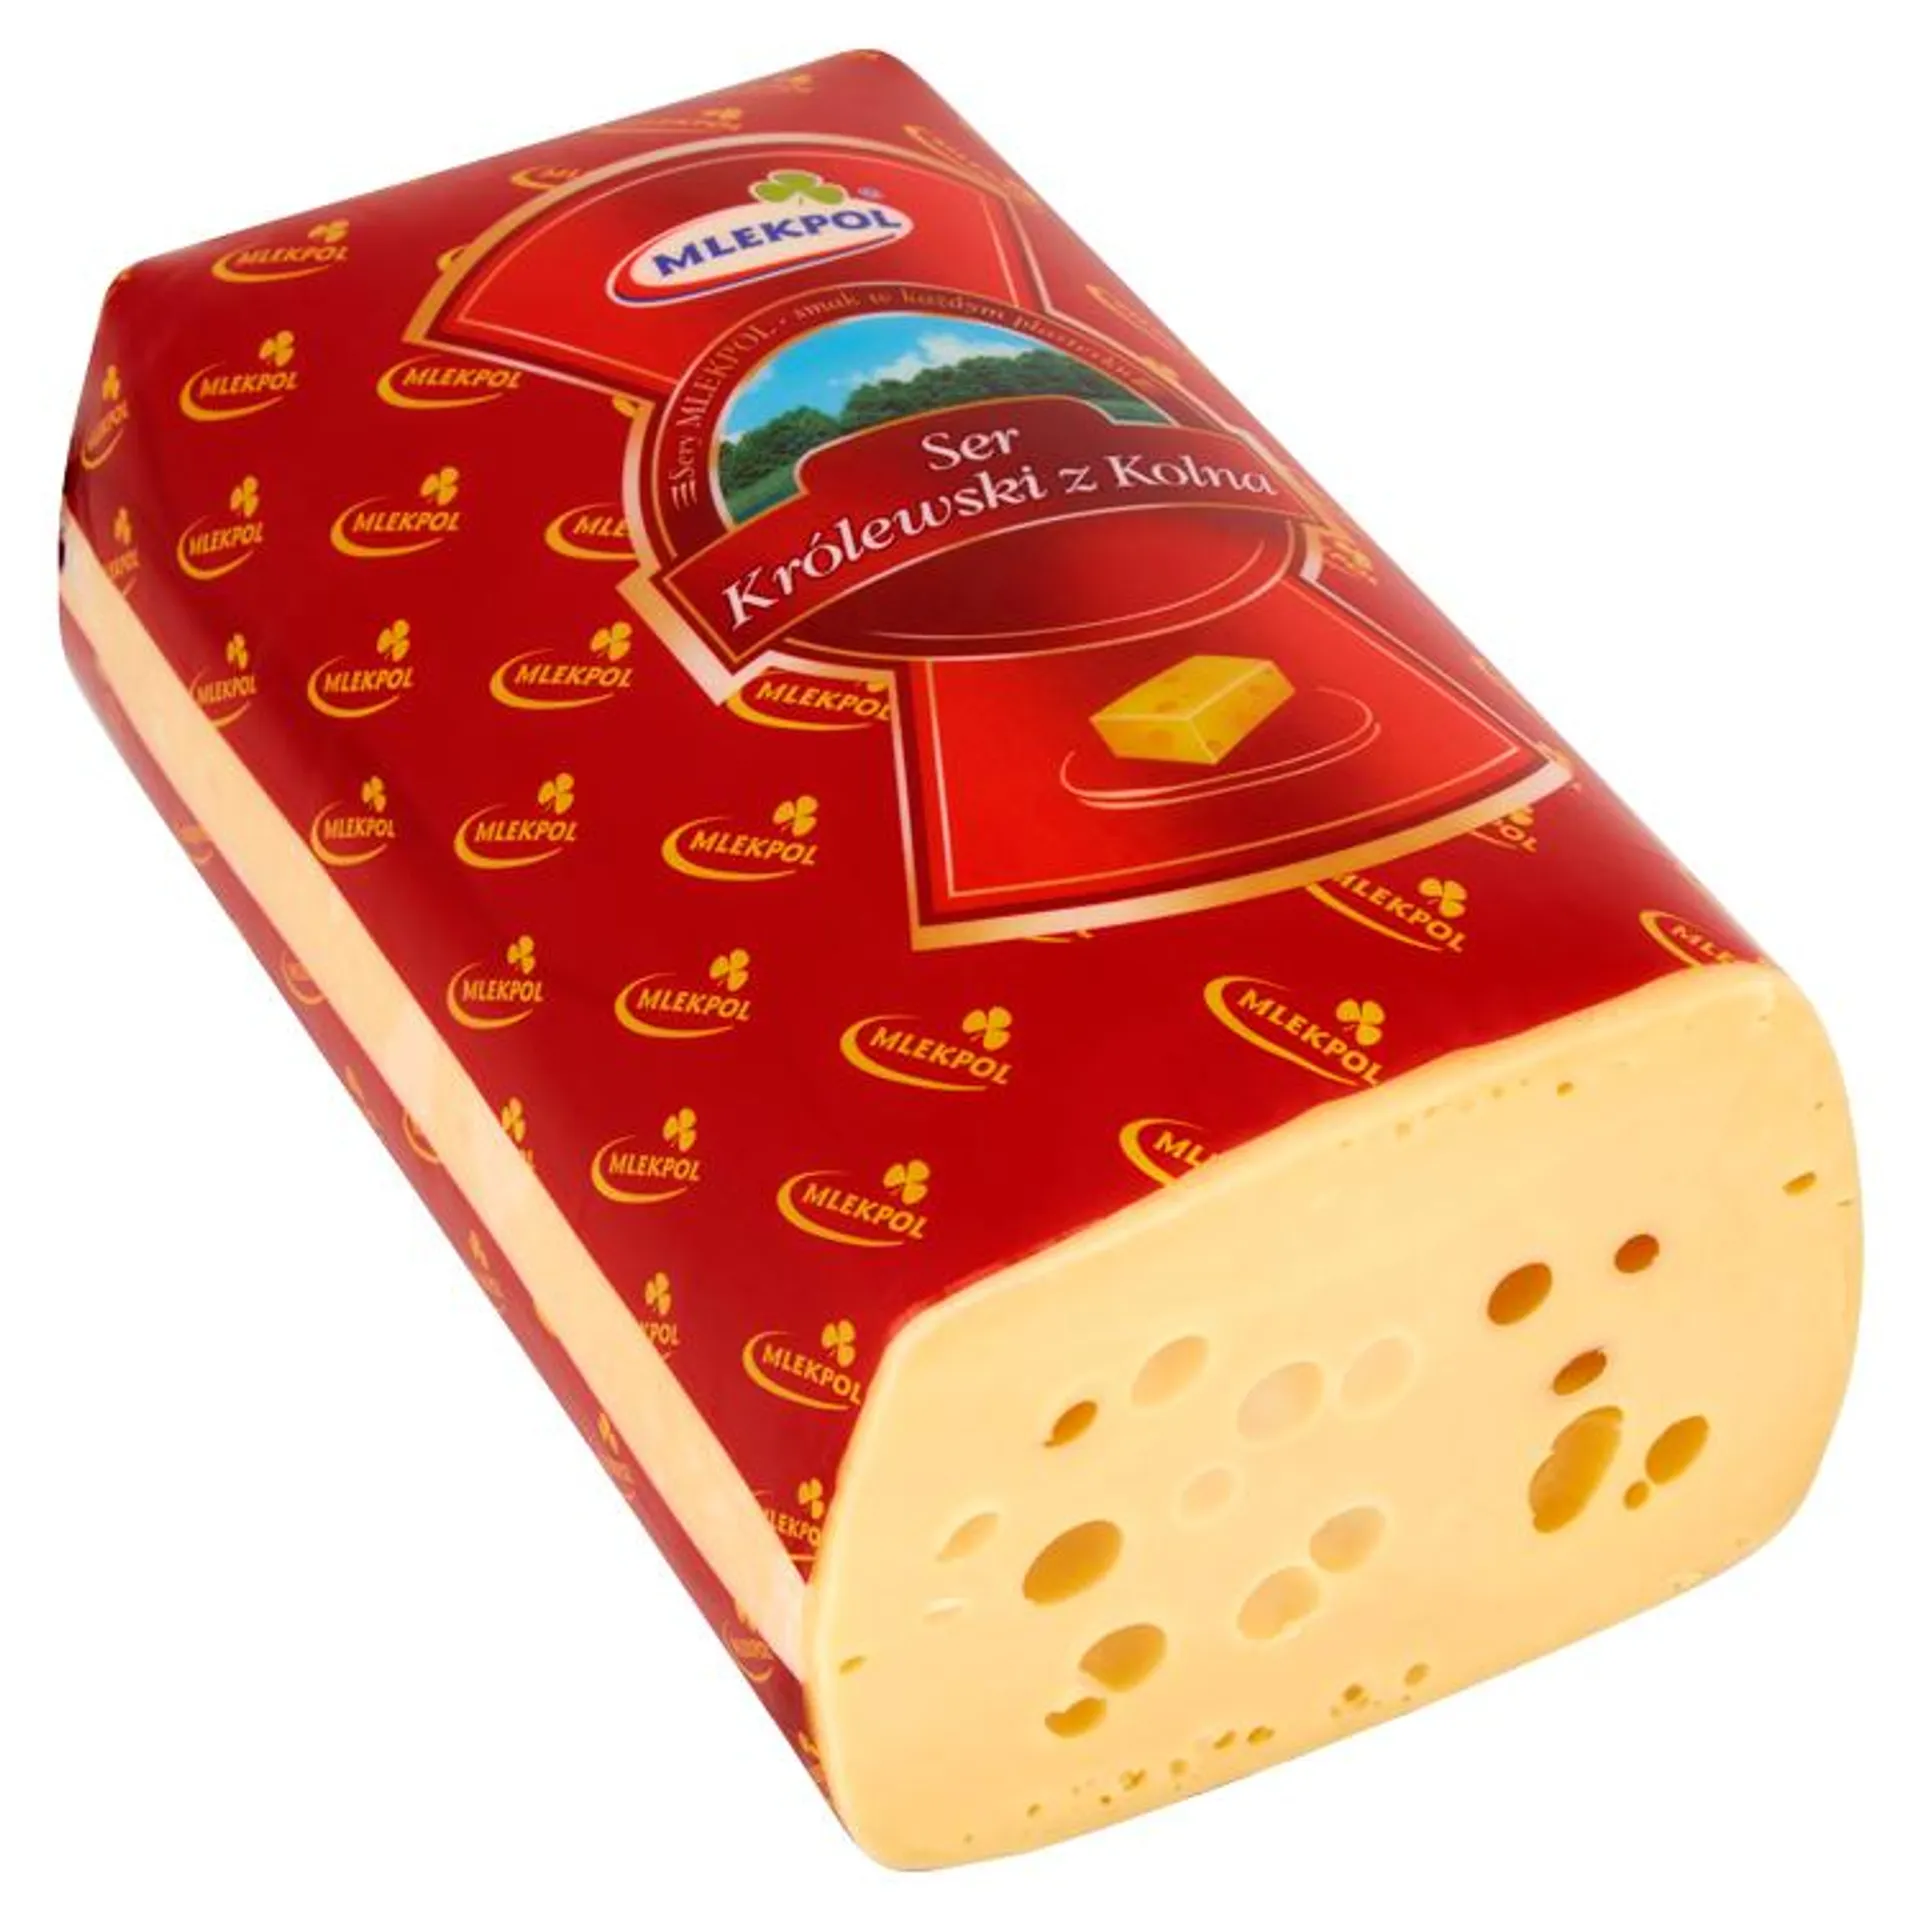 Cheese Krolewski 100g (Sliced)